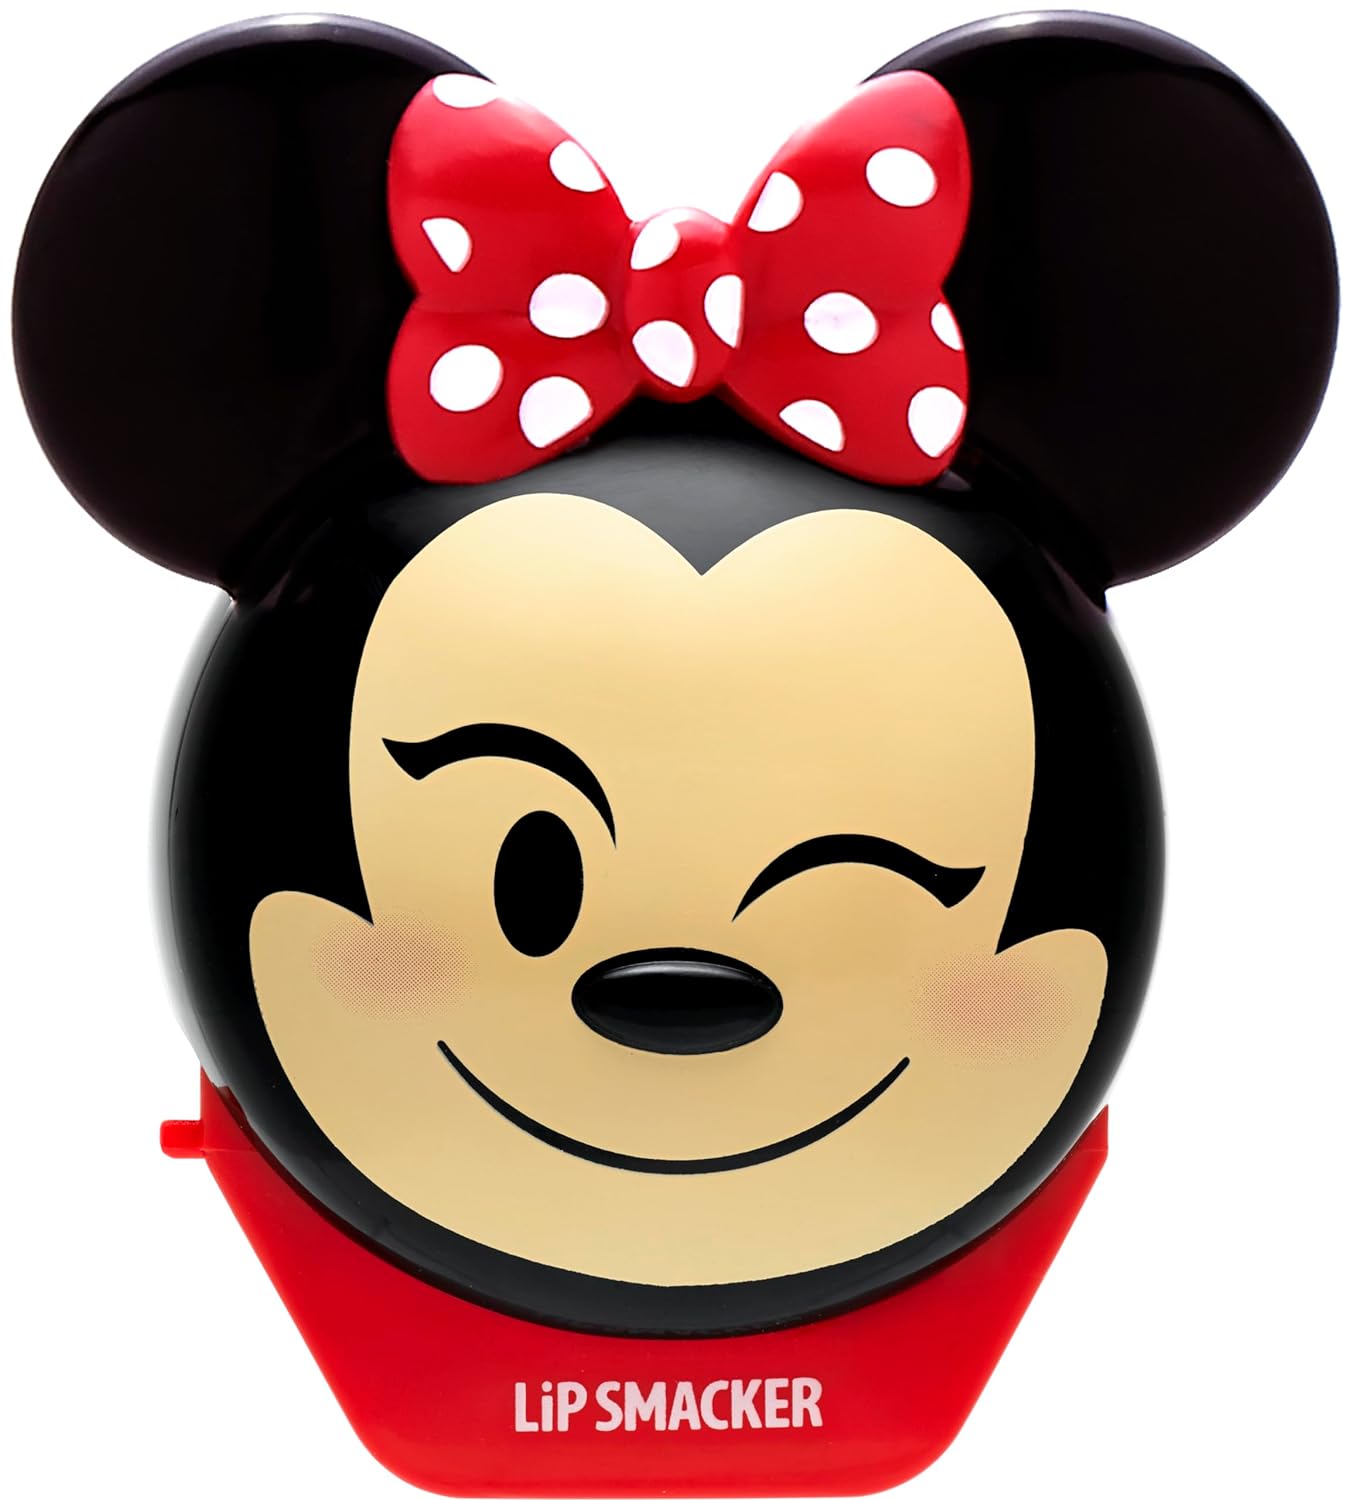 Lip Smacker Disney Minnie Mouse Emoji Lip Balm, Strawberry Lemonade Flavored, Clear, For Kids